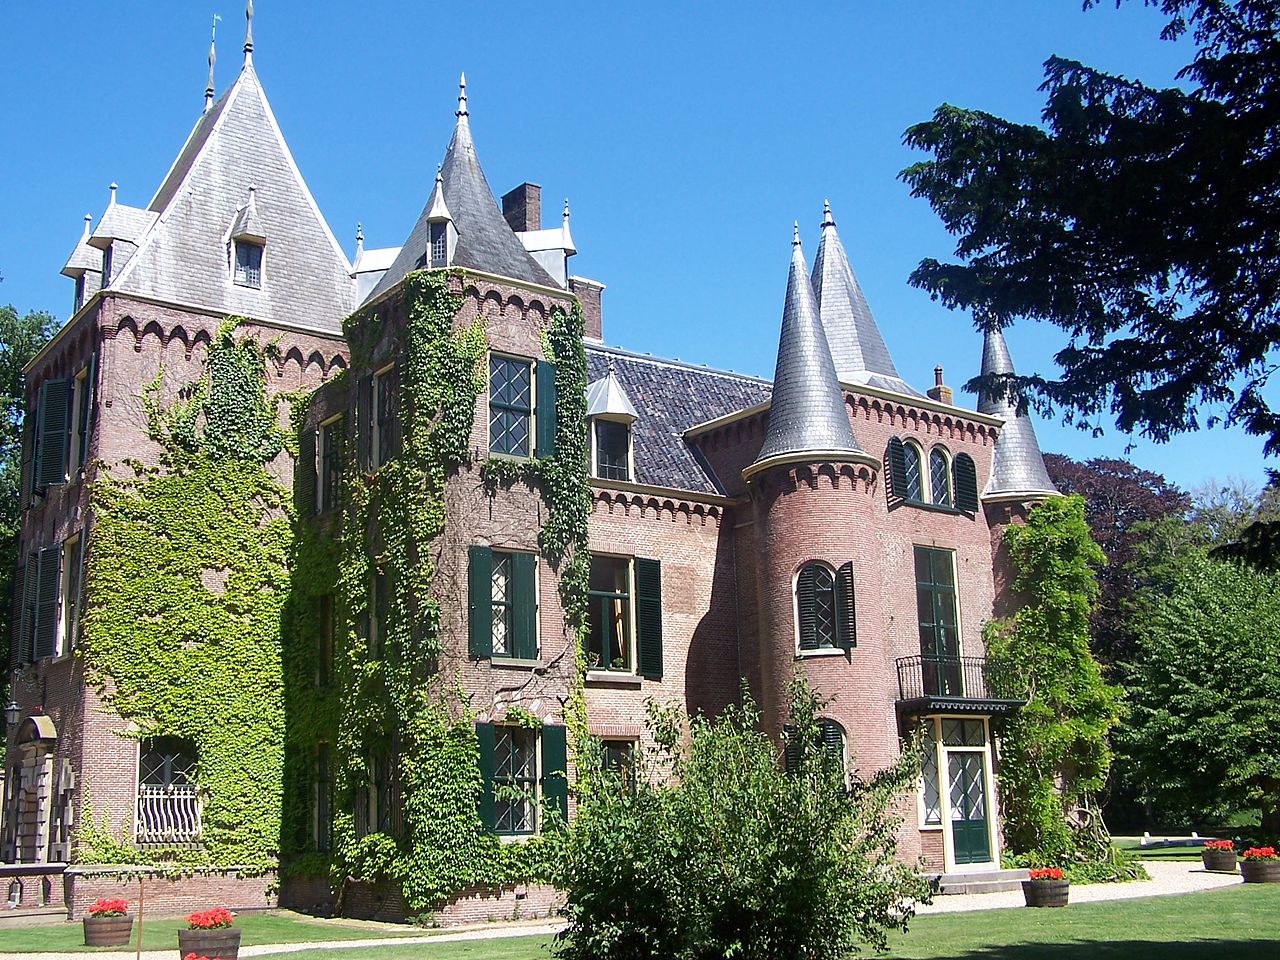 The Keukenhof Castle